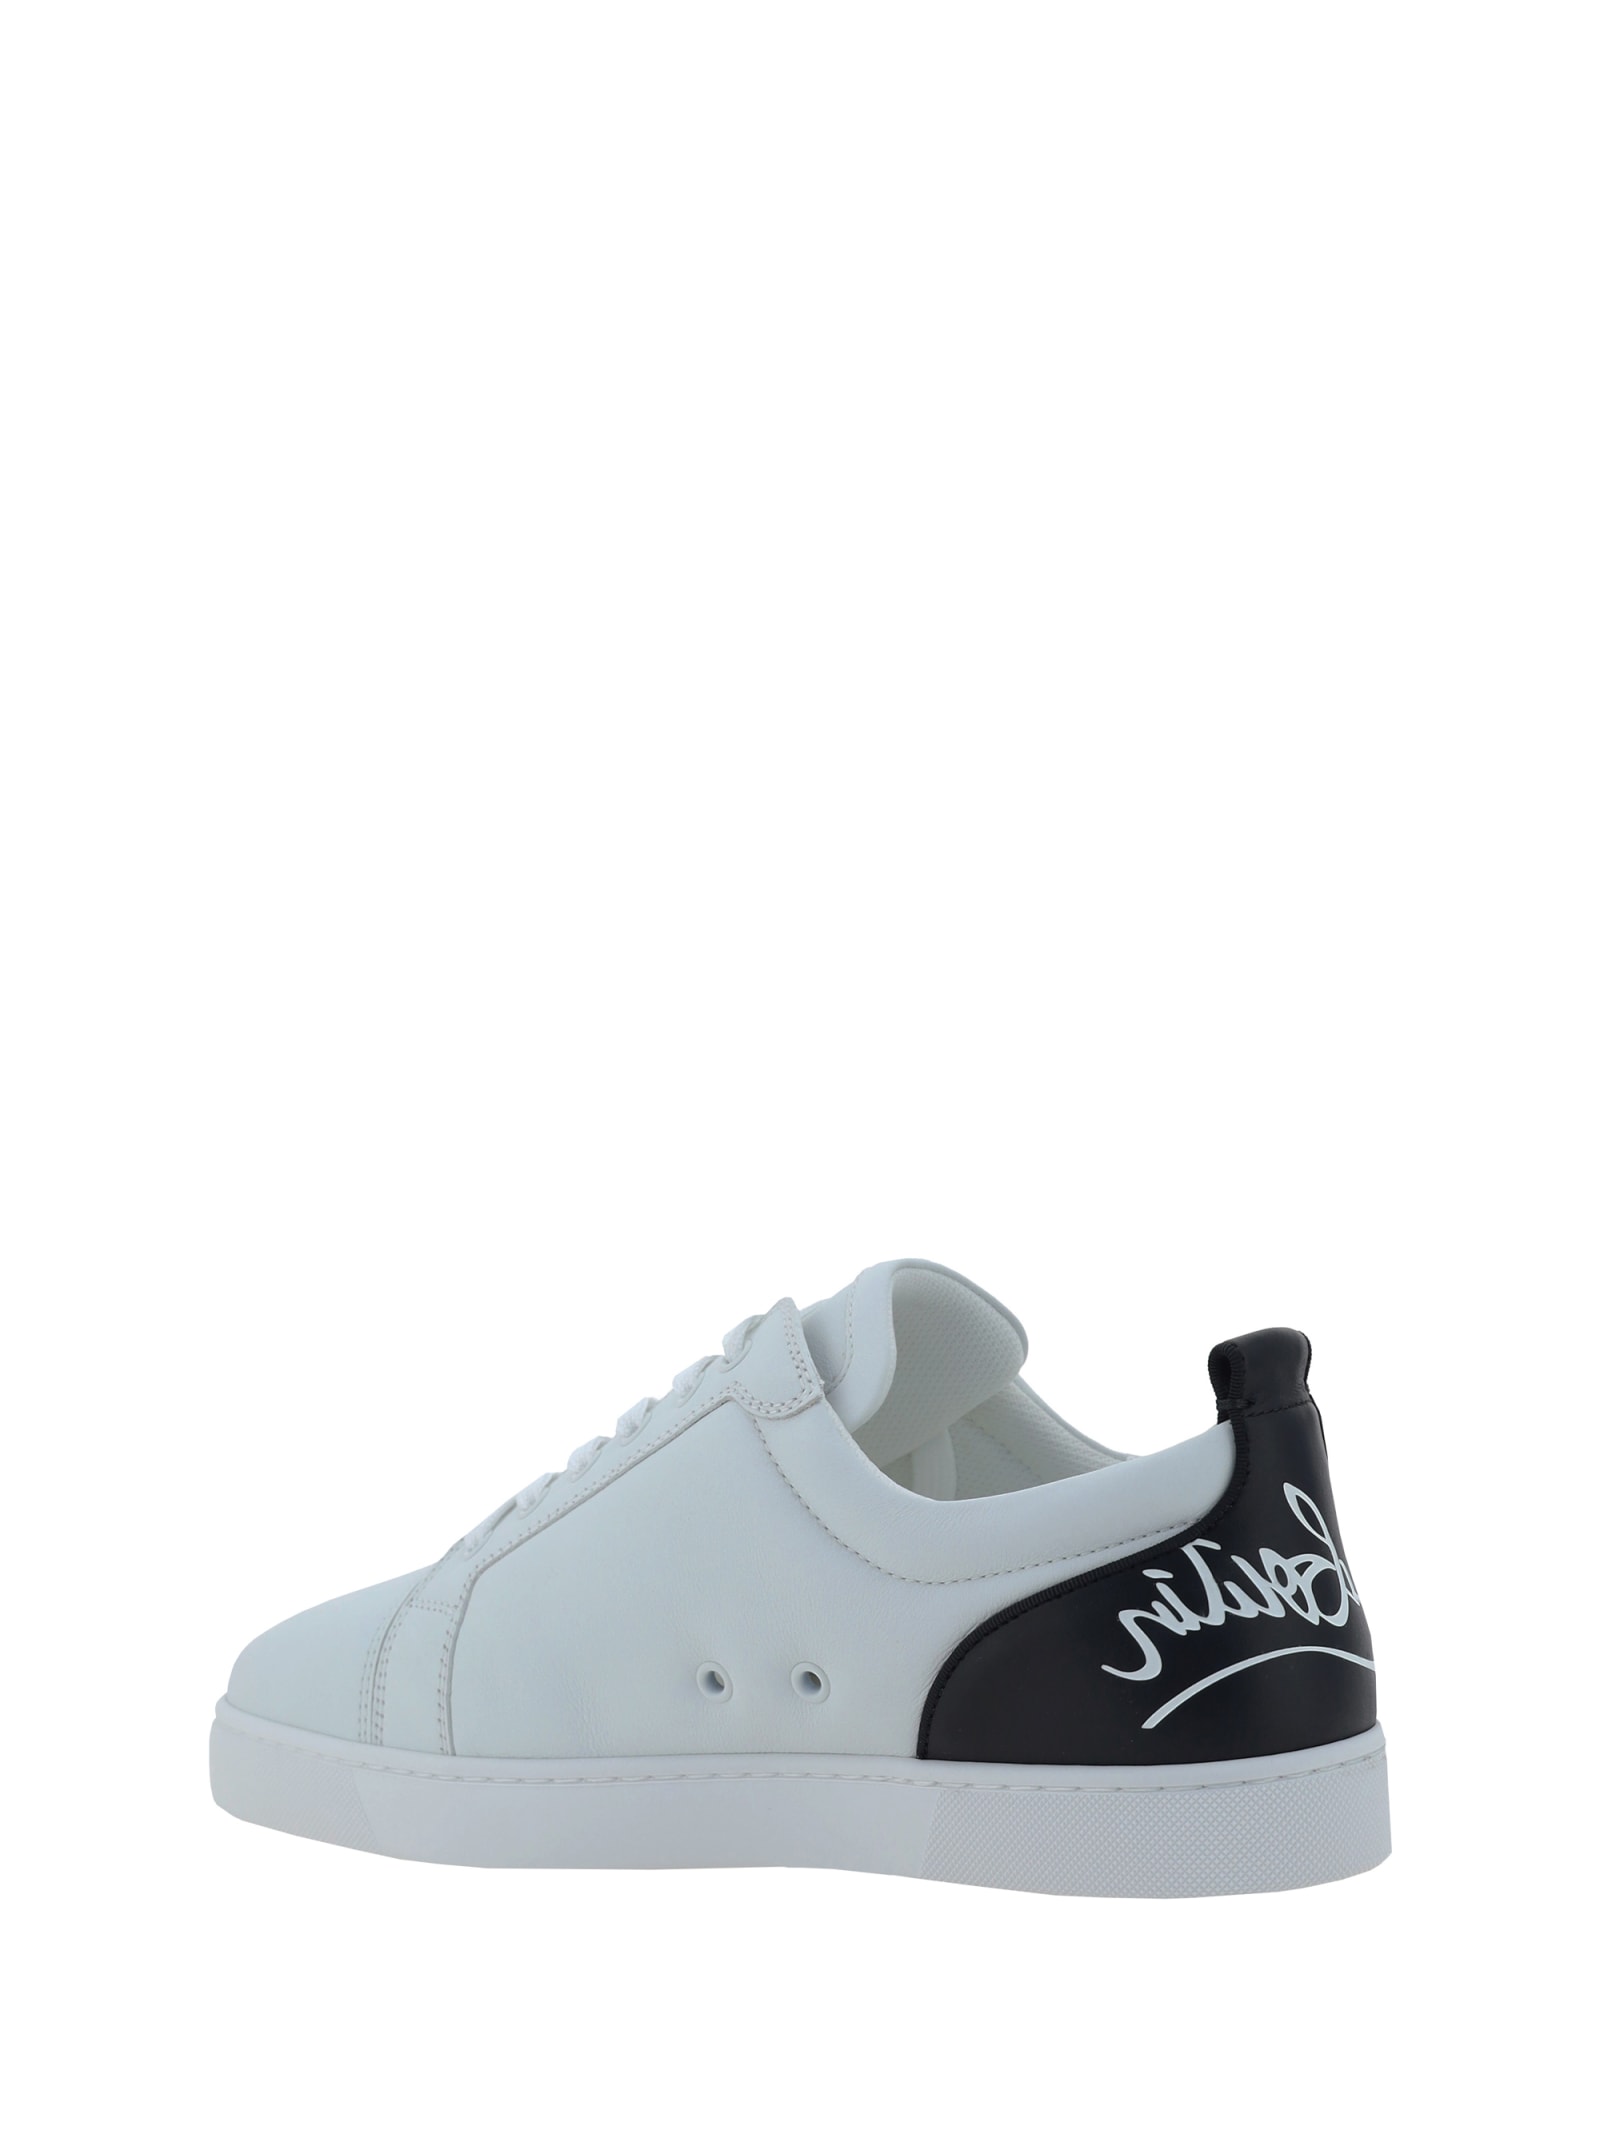 Shop Christian Louboutin Fun Louis Junior Sneakers In White/black